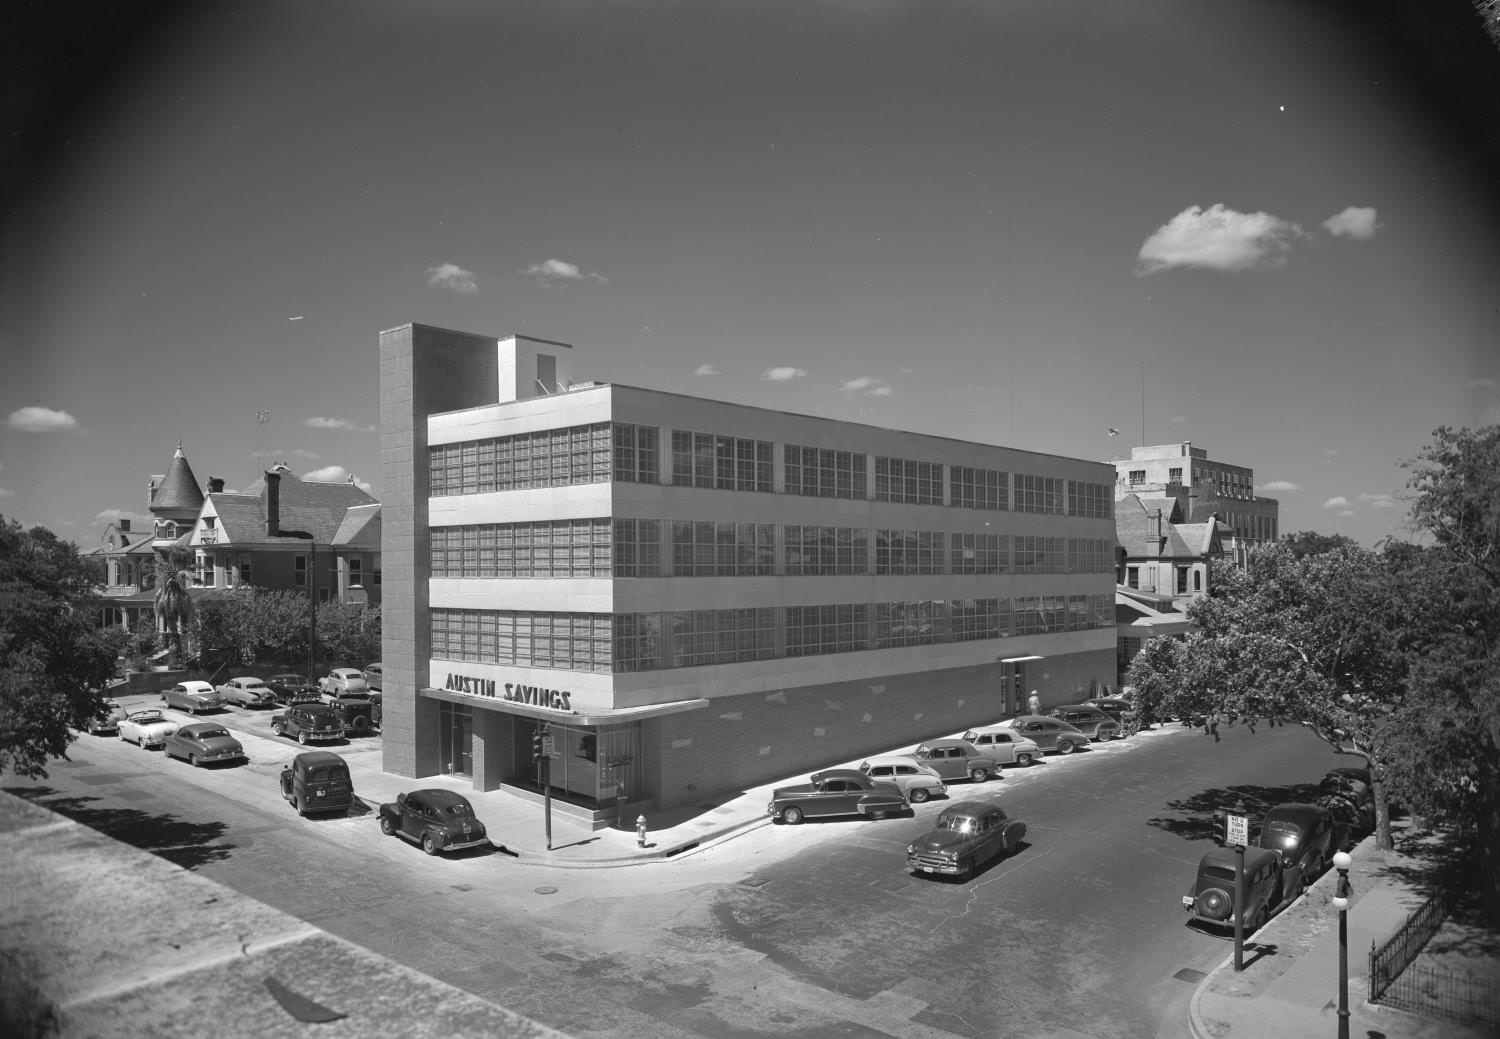 Austin Savings and Loan Assosciation Building, 1951